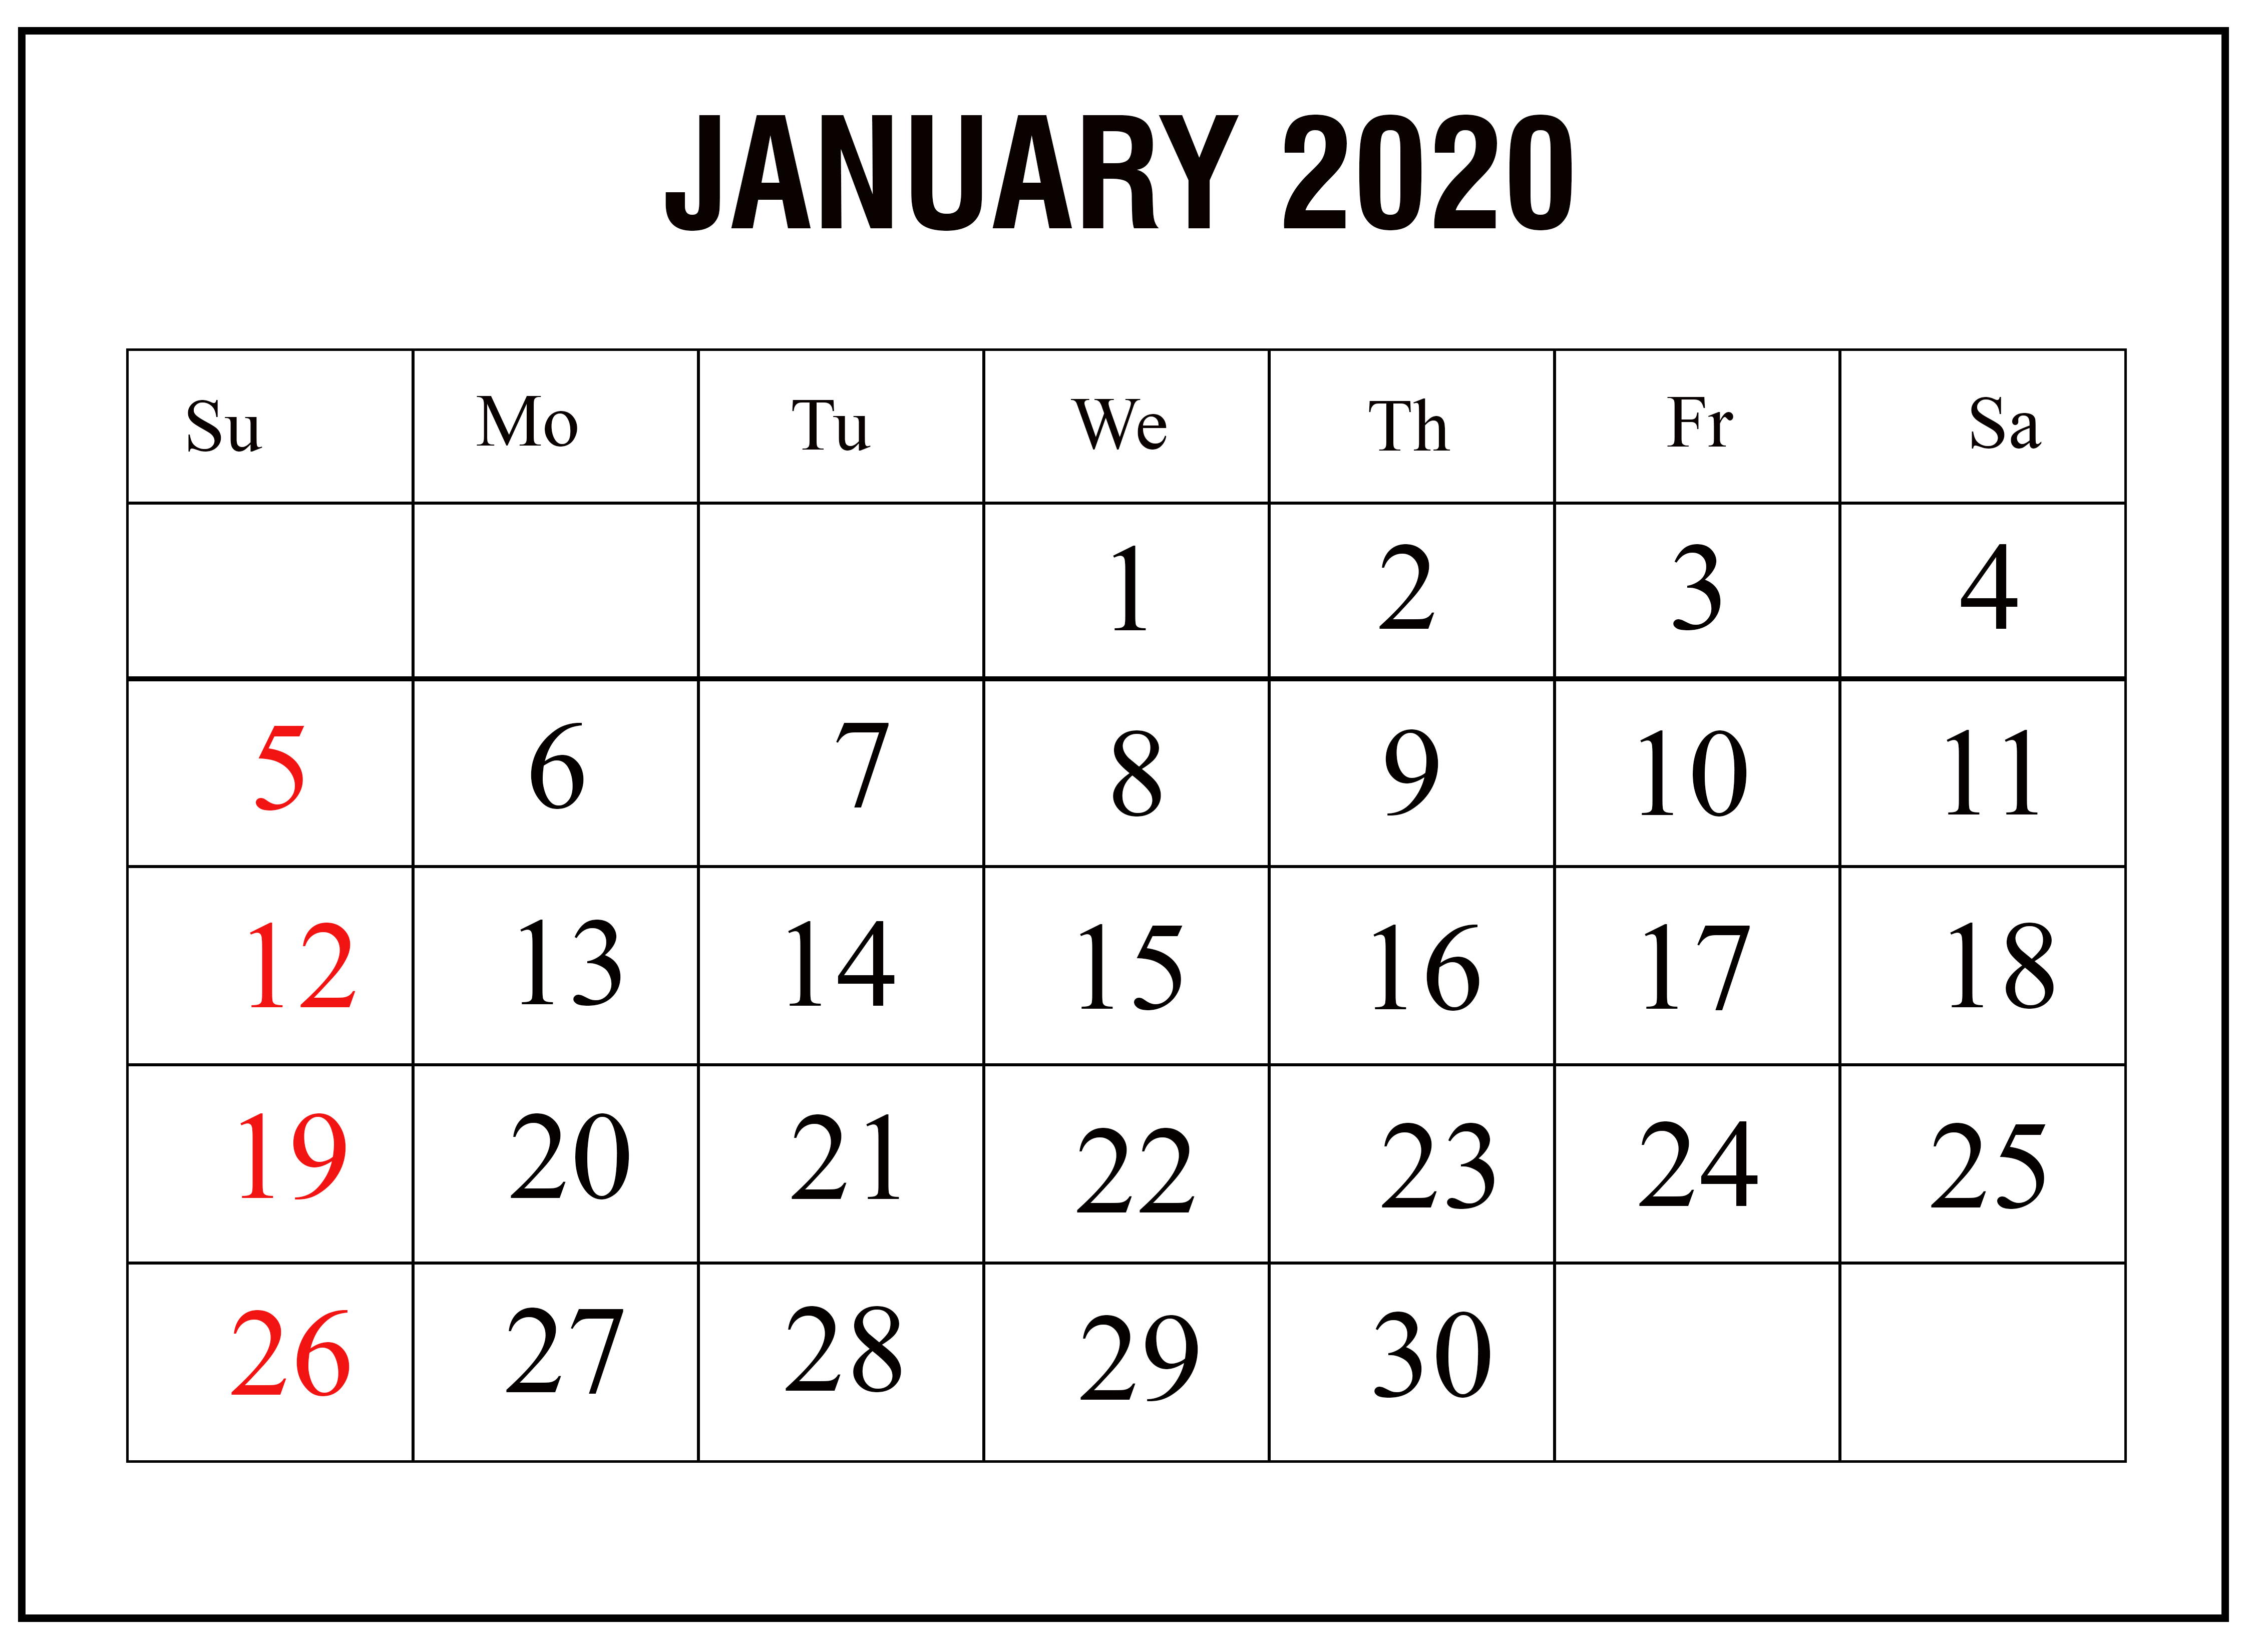 Download Free January 2020 Calendar | Calendar Wine with January 2020 Calendar Png